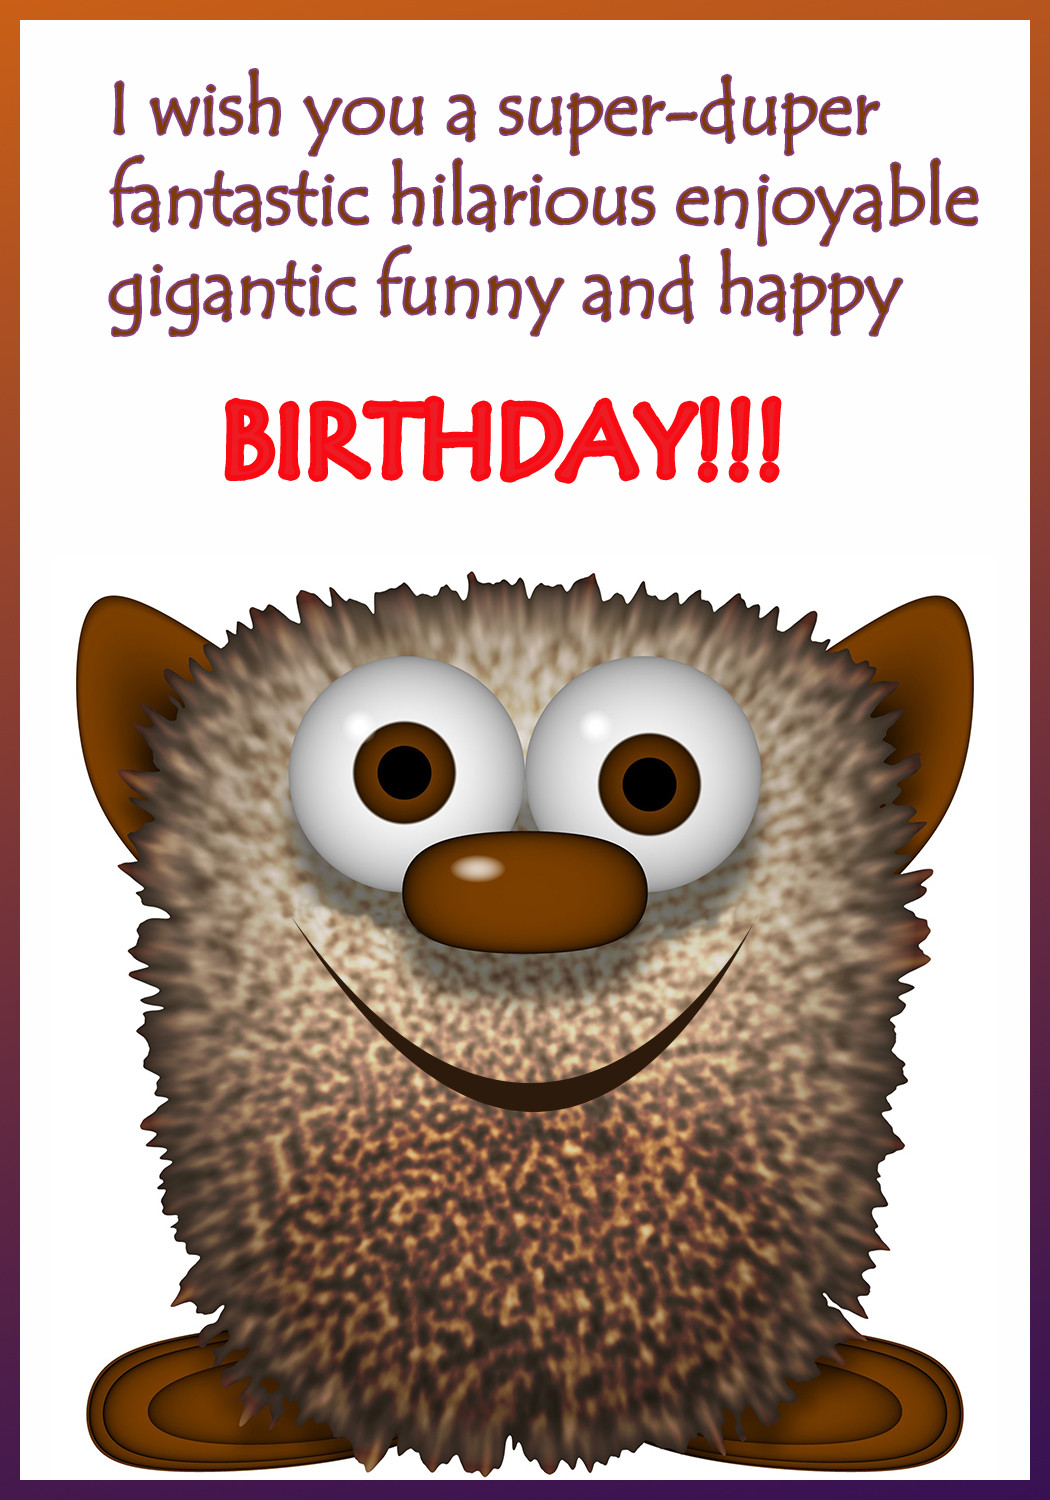 Funny Happy Birthday Greeting
 Funny Printable Birthday Cards